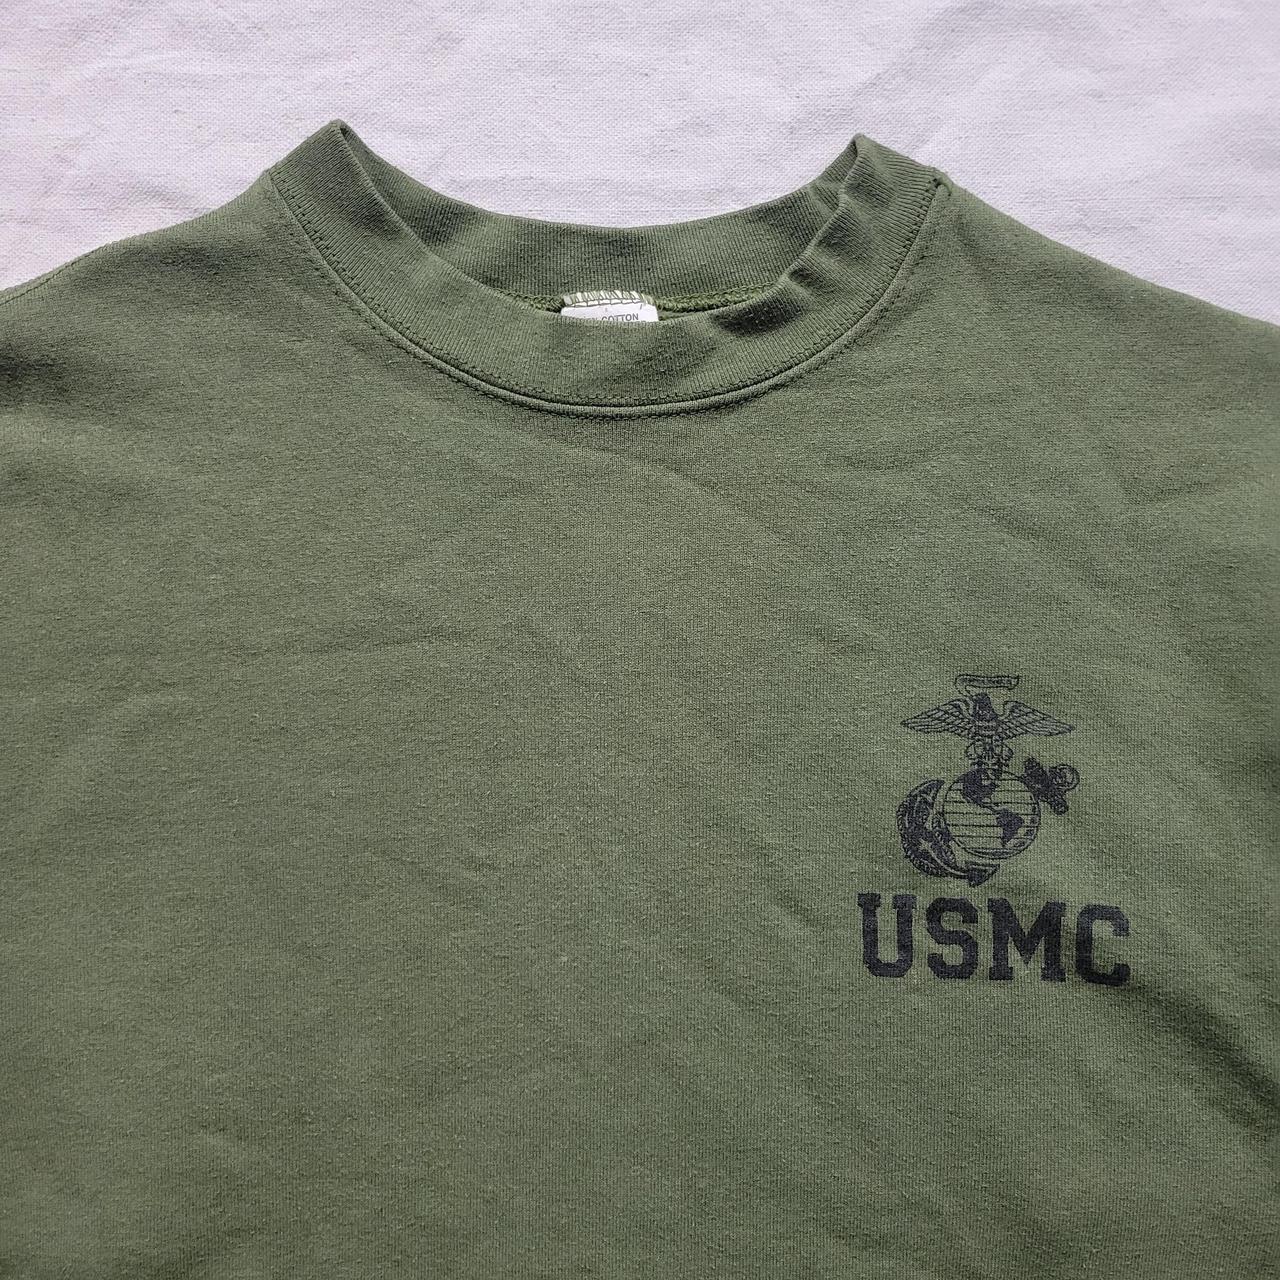 Vintage Campbellsville Apparel Company Green Graphic USMC Sweater